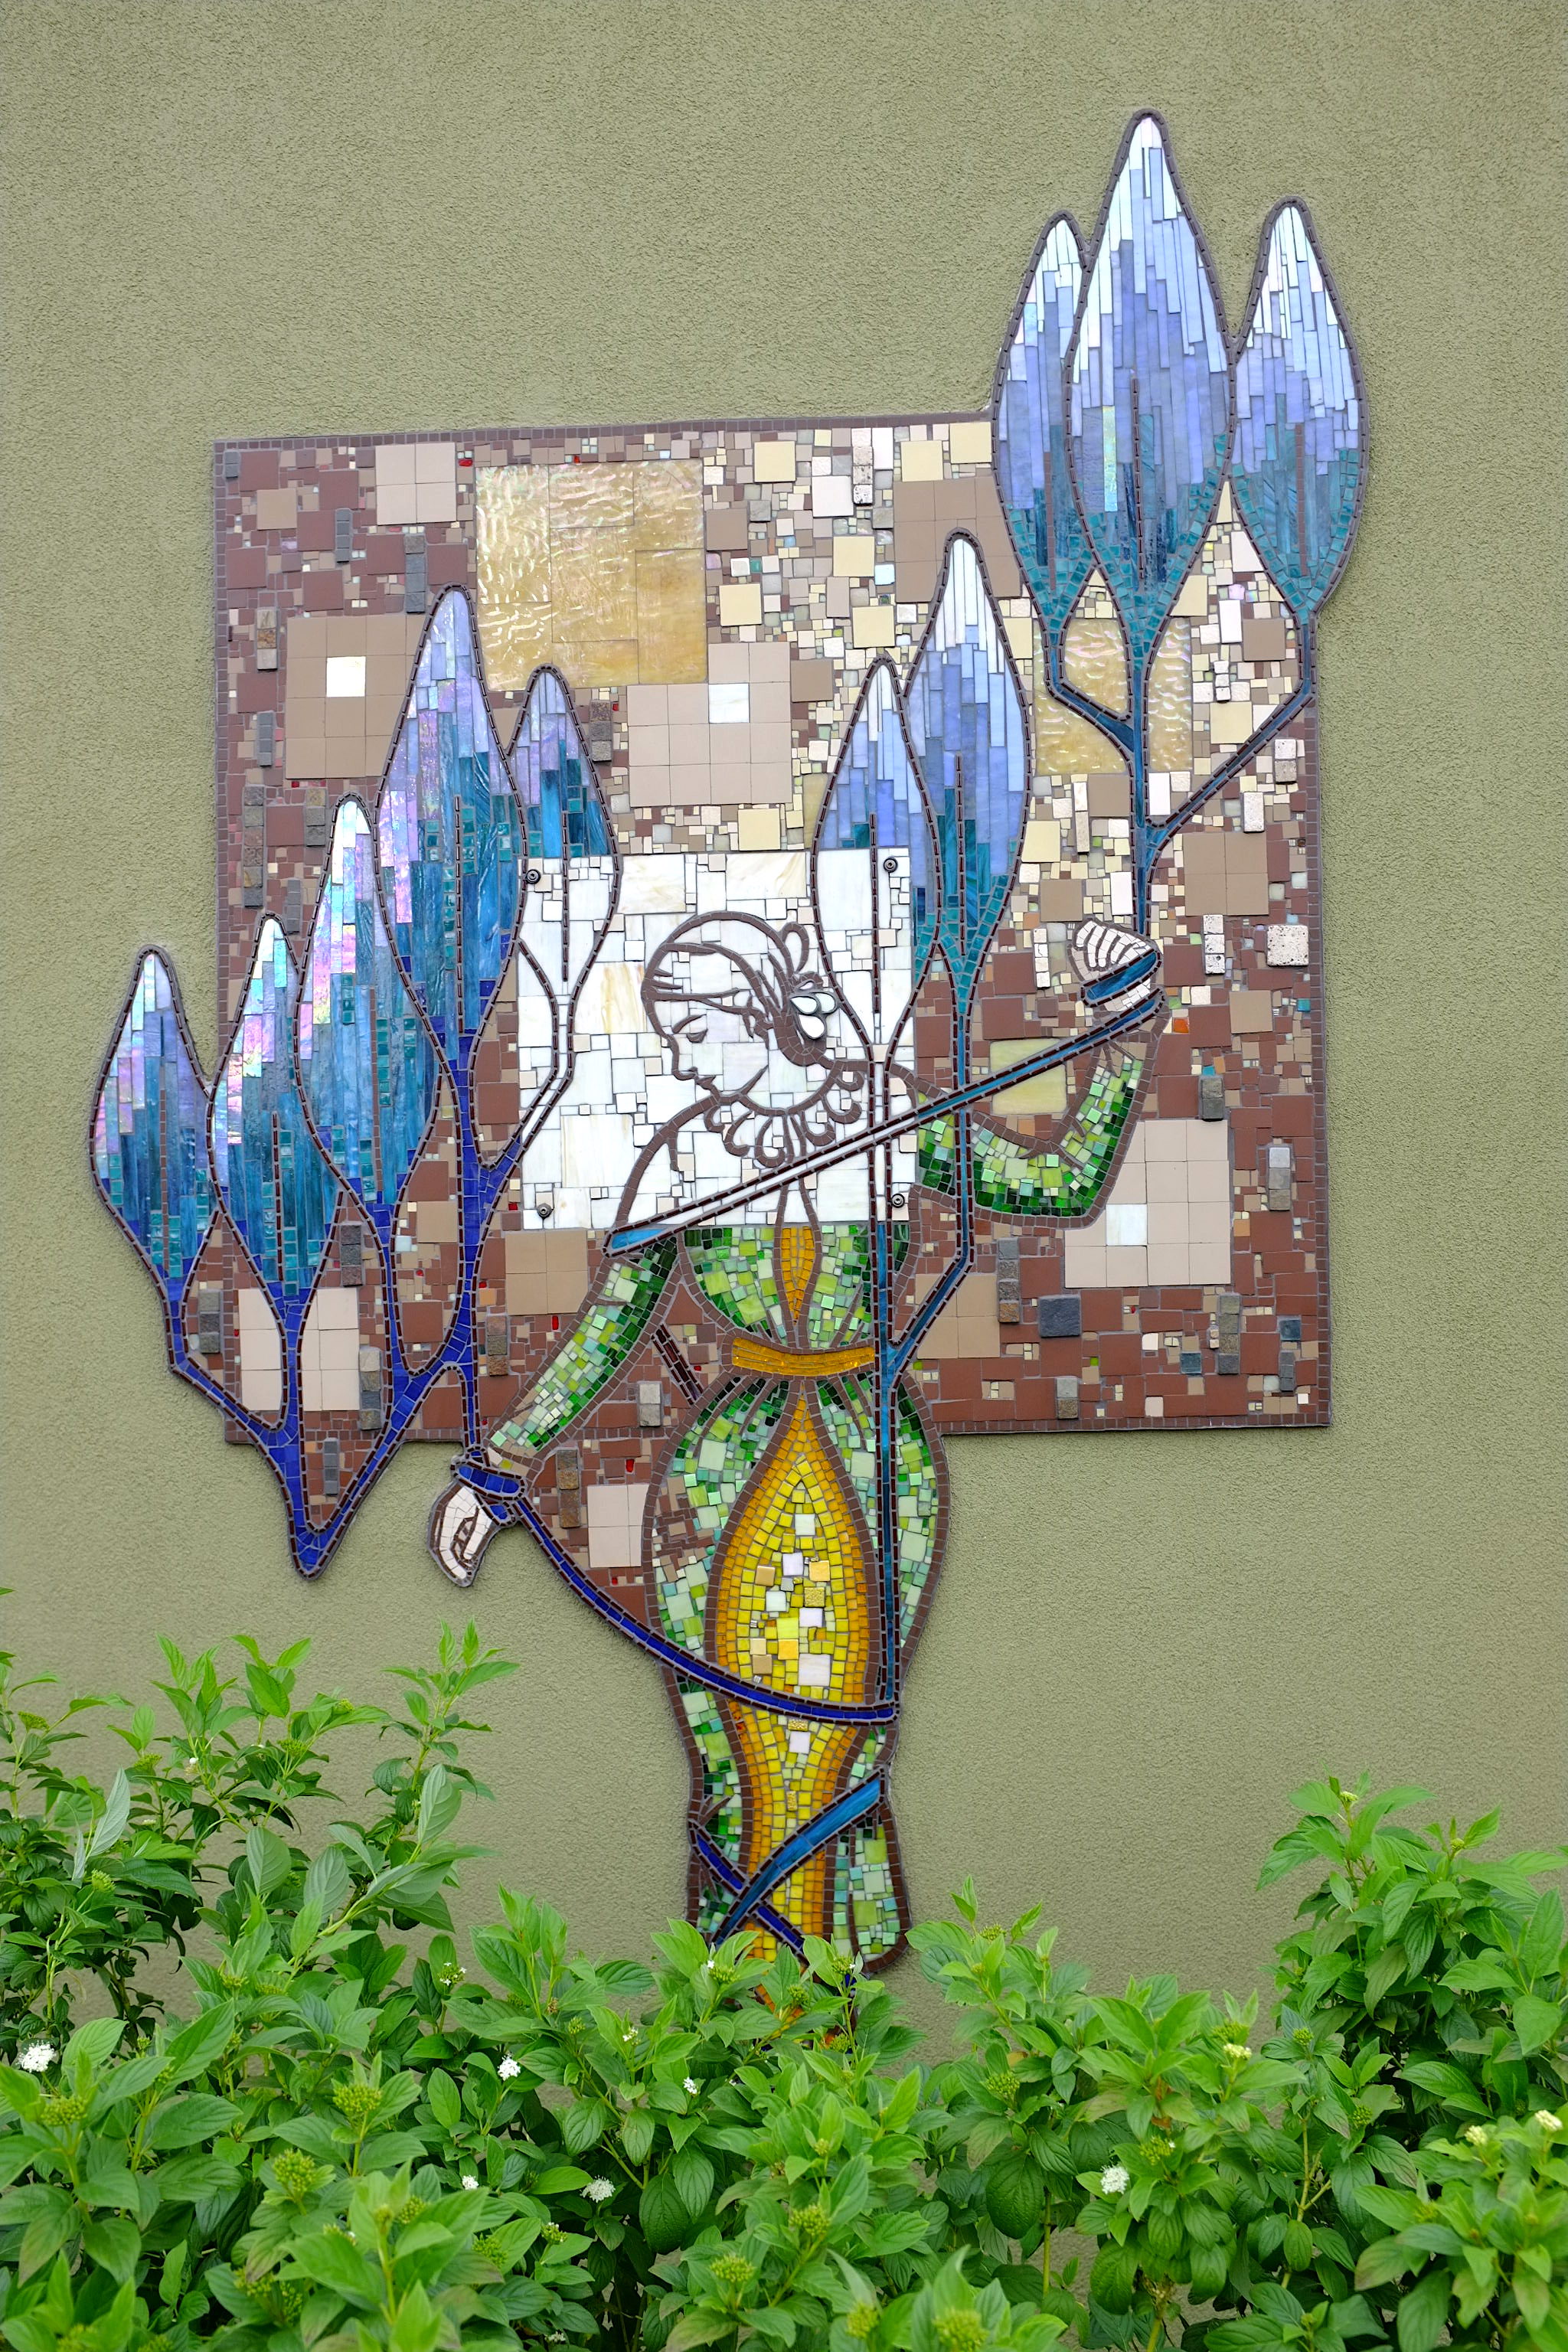 mosaic of a women depicting empowerment